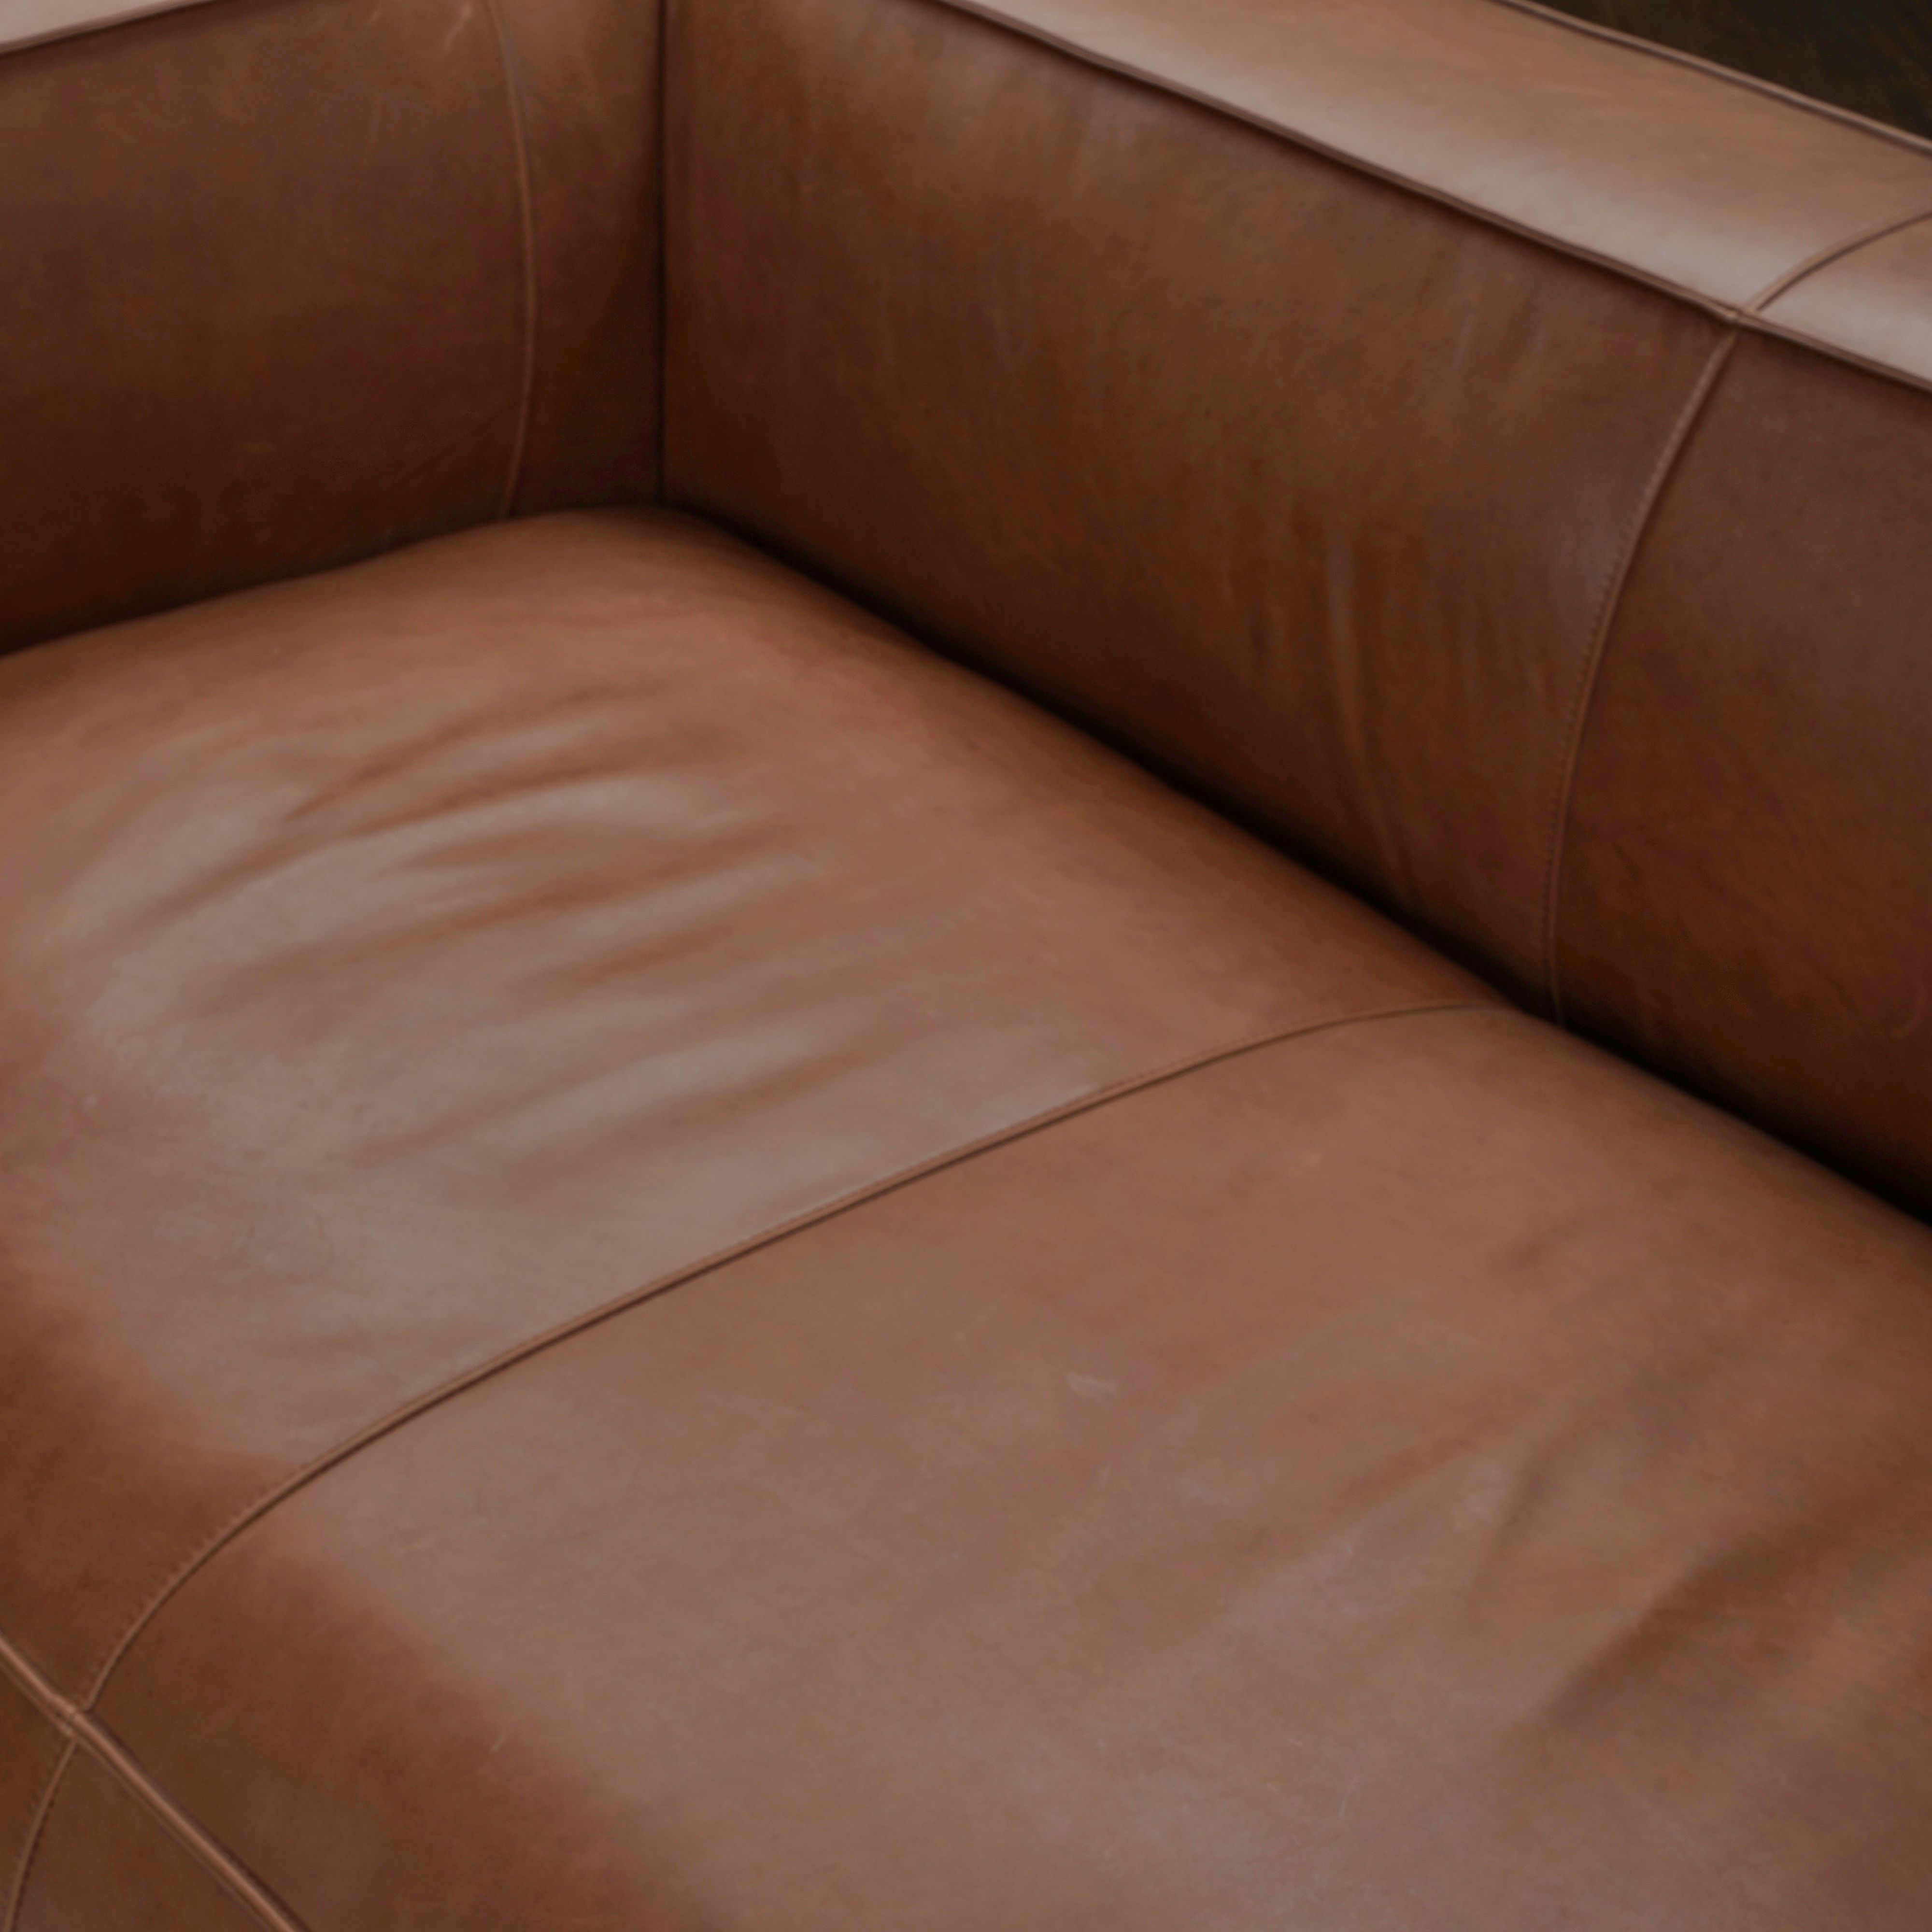 Vanessa Full Aniline Leather Stationary Sofa - Brown